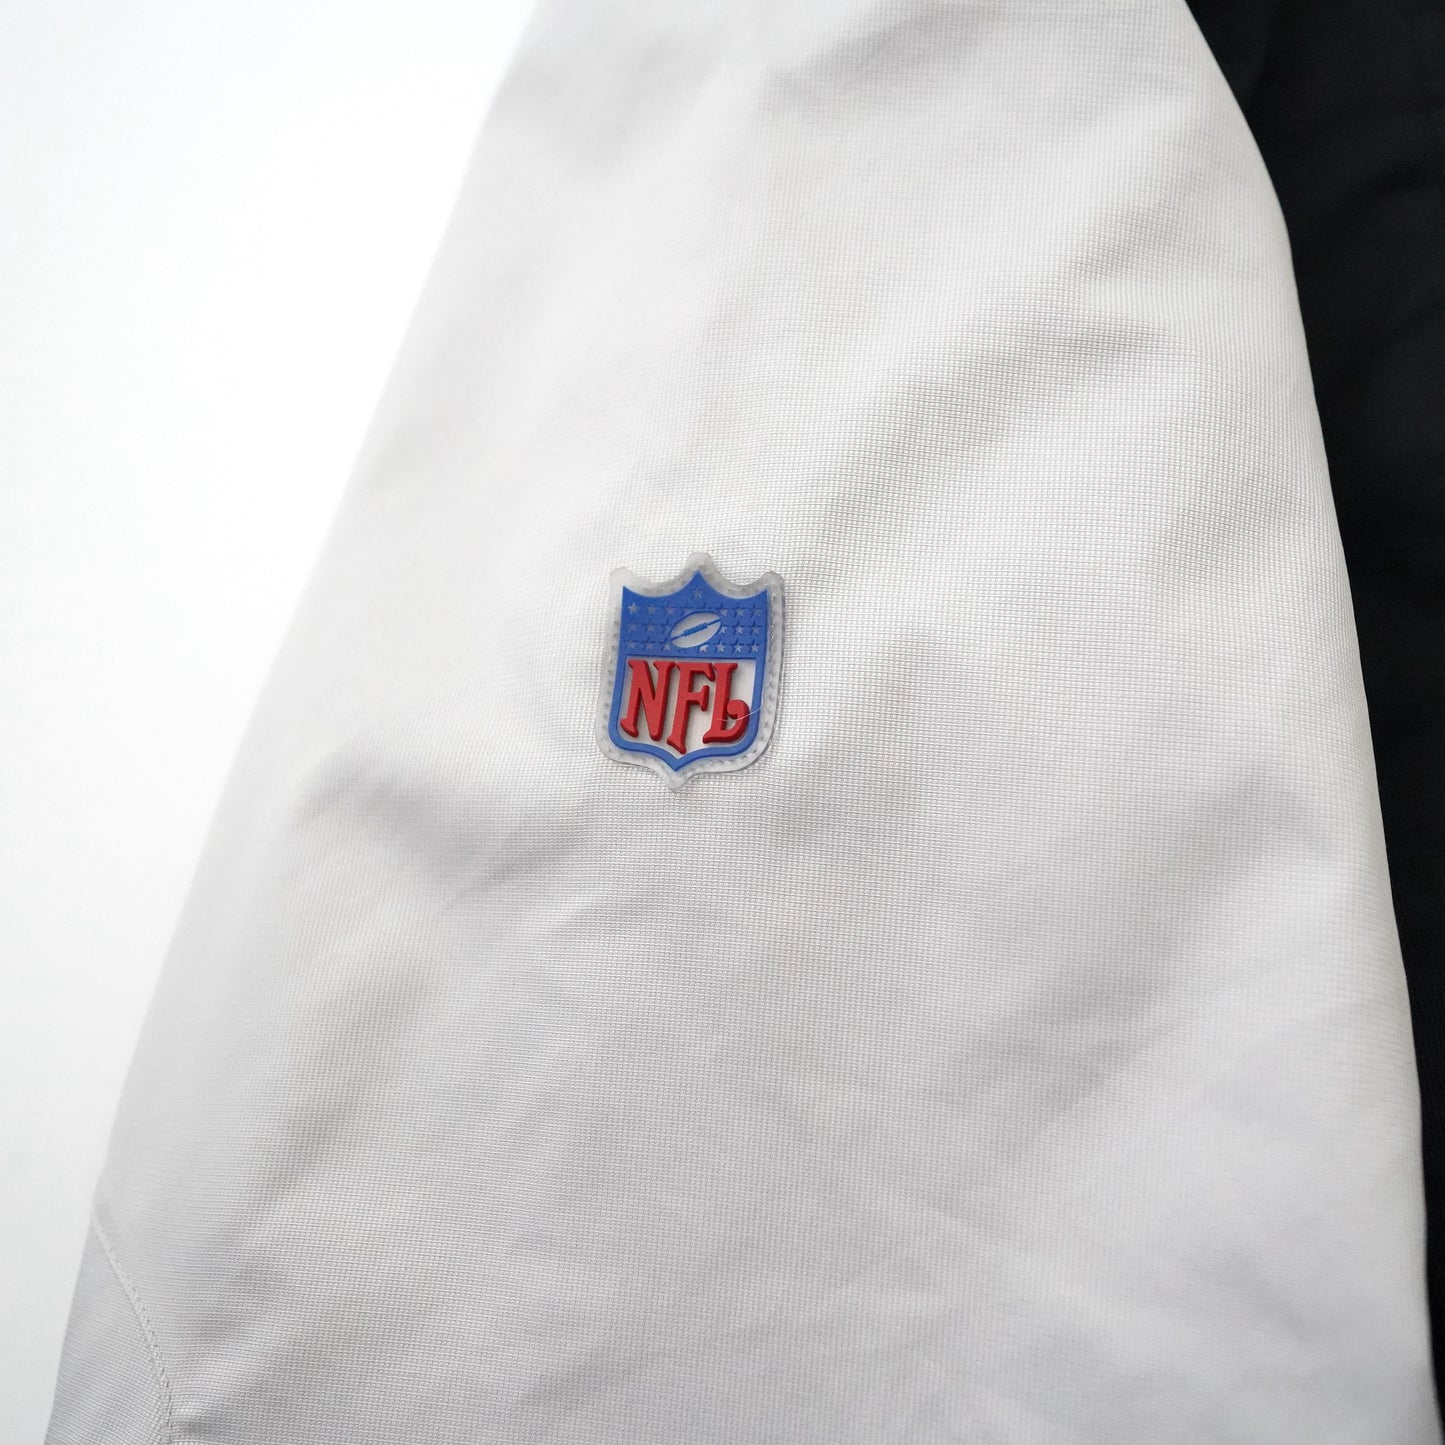 NFL RAIDERS polyester jacket